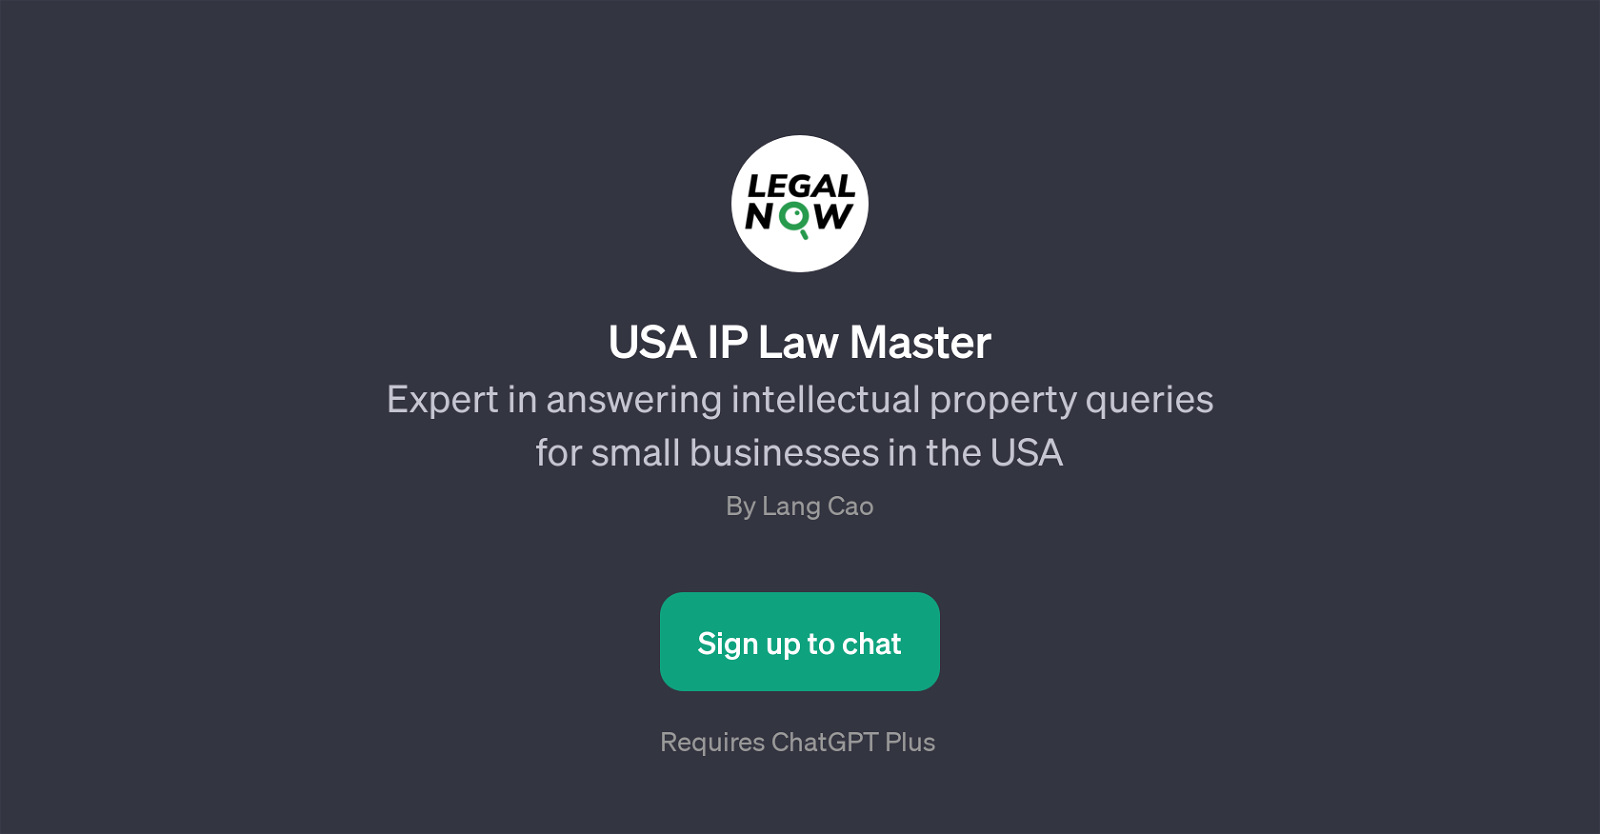 USA IP Law Master website